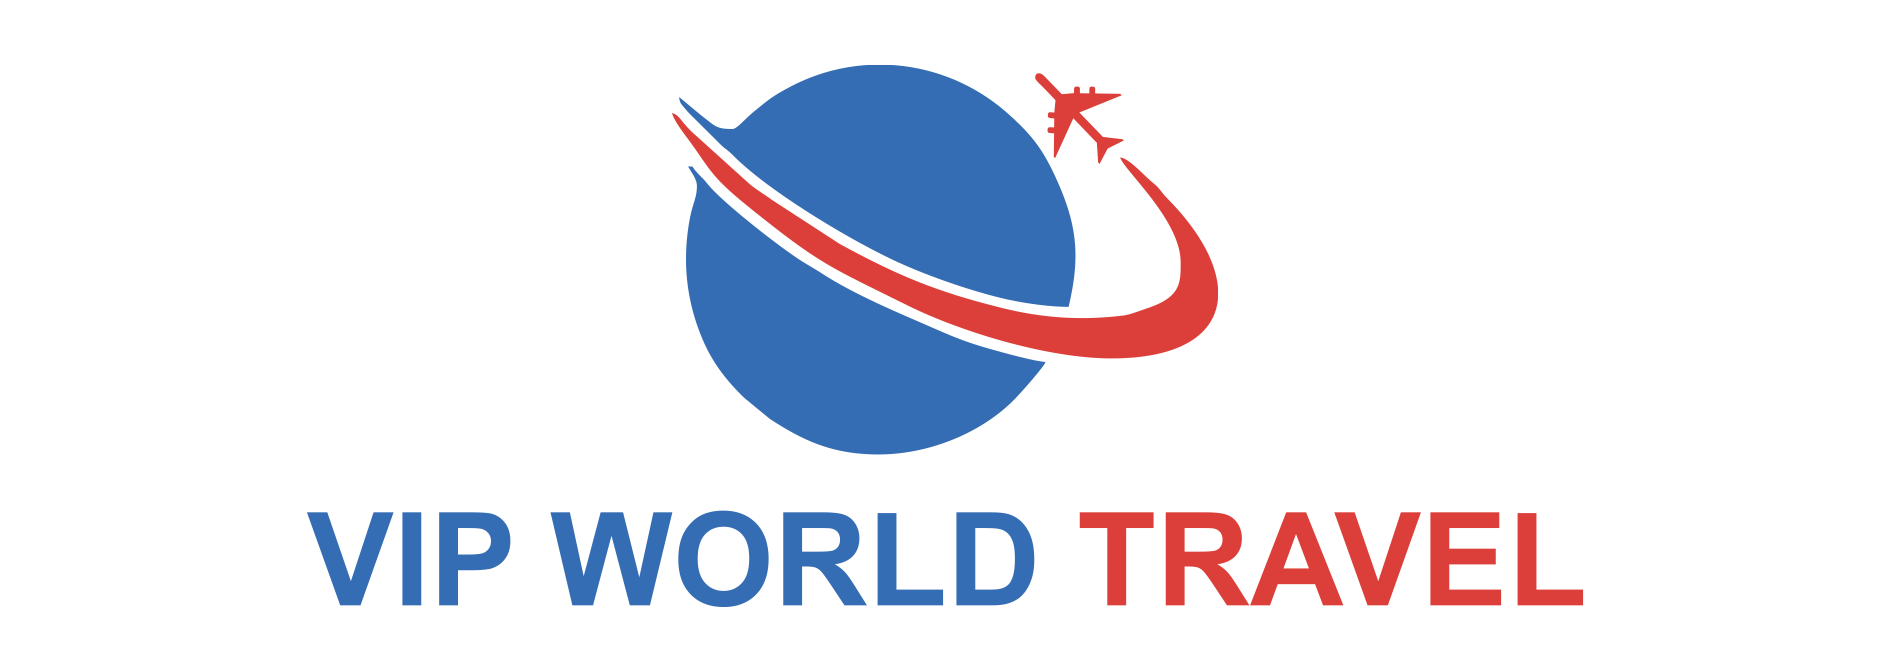 Vip World Travel